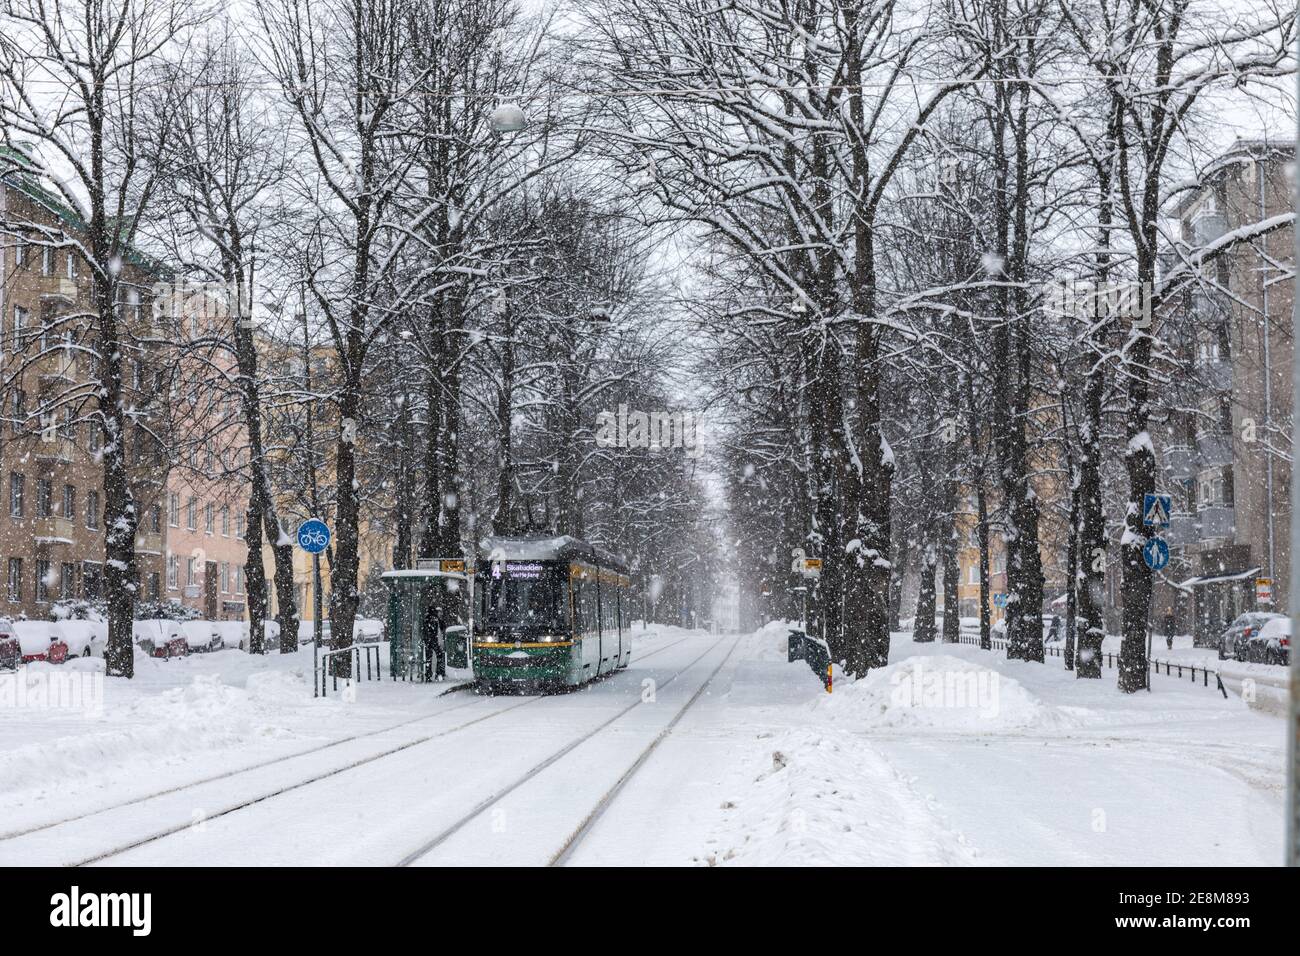 Tram 463 on line 4 at Munkkiniemen puitstotie tram stop during heavy snowfall in Munkkiniemi district of Helsinki, Finland Stock Photo